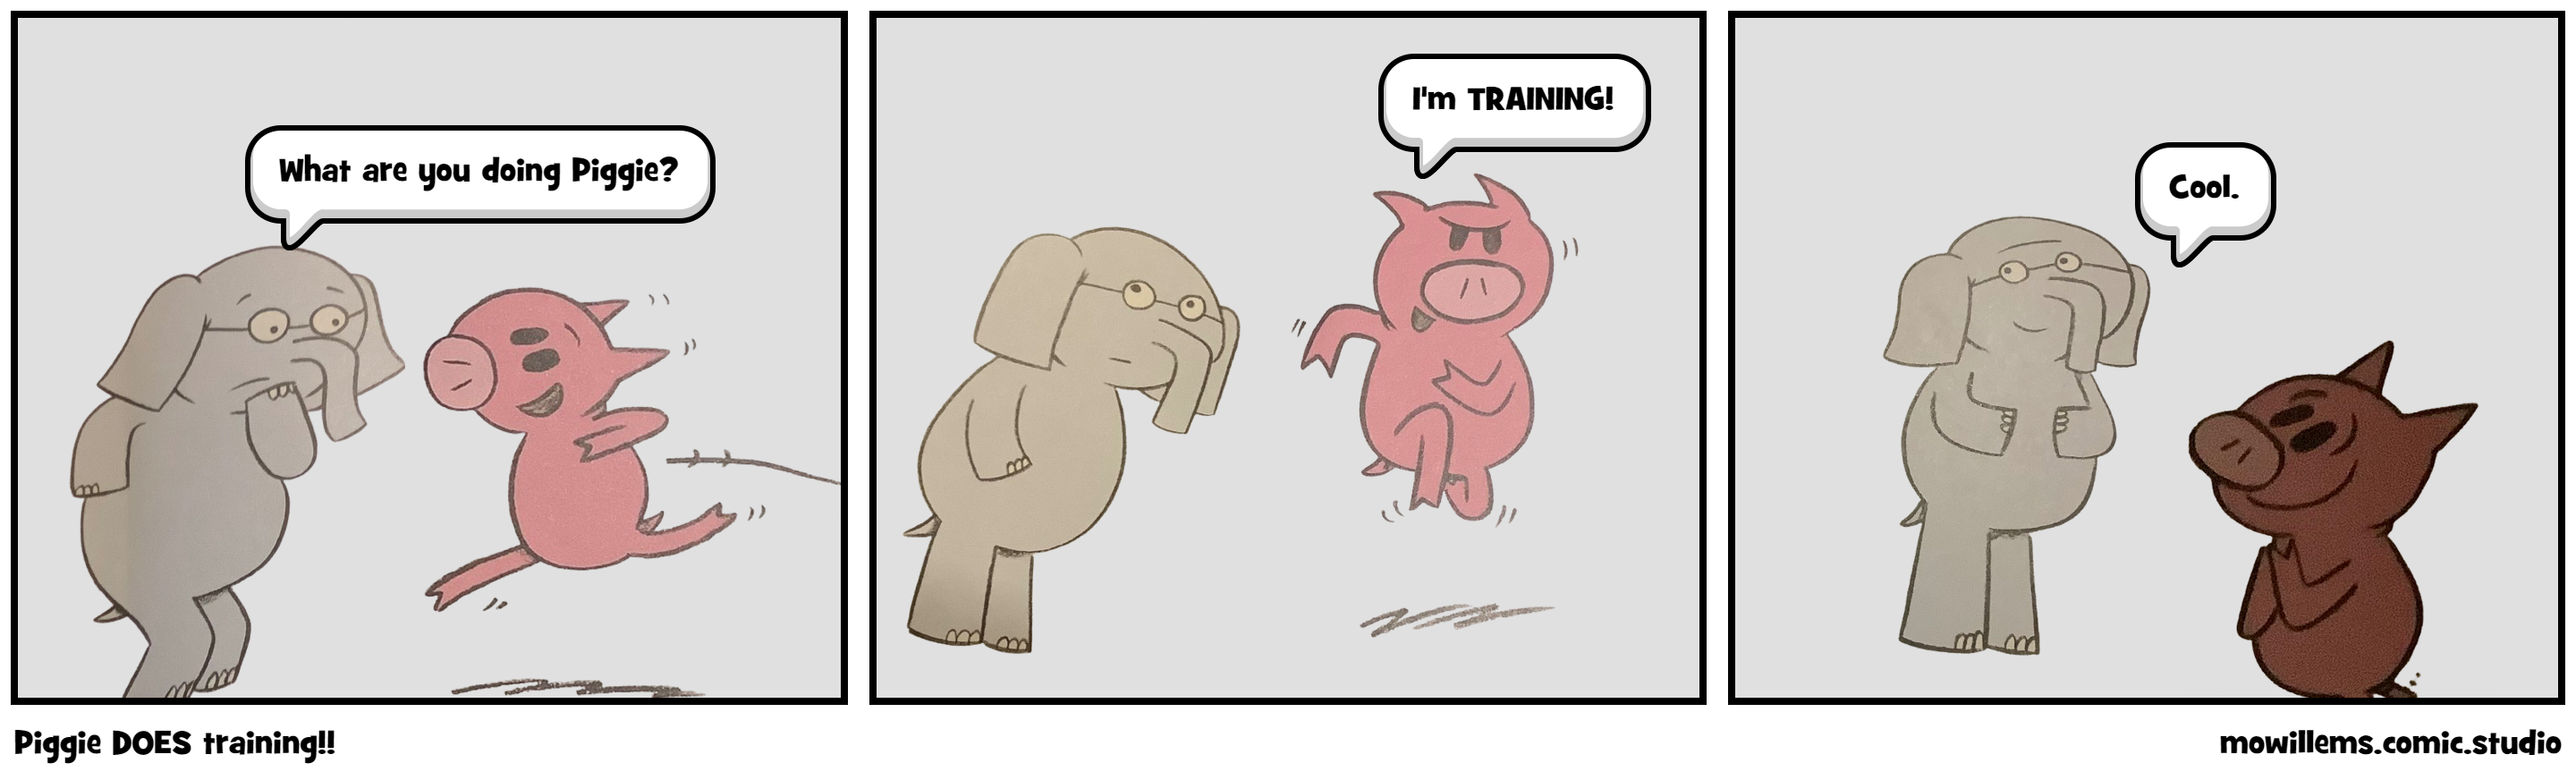 Piggie DOES training!!